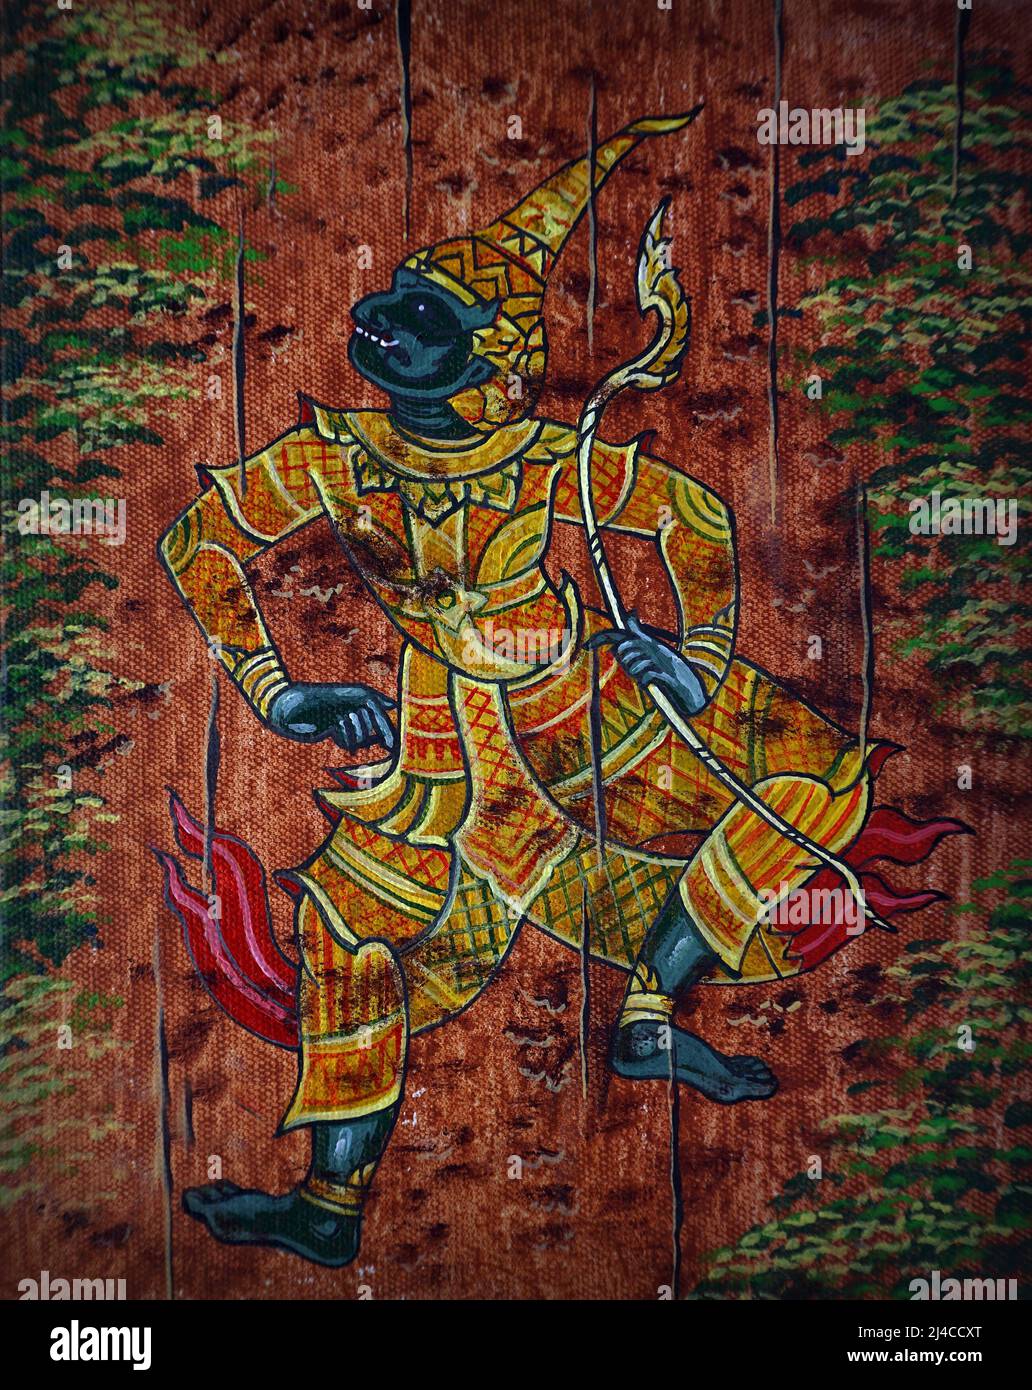 Art oil painting Ramayana story in the grand palace of bangkok Stock Photo